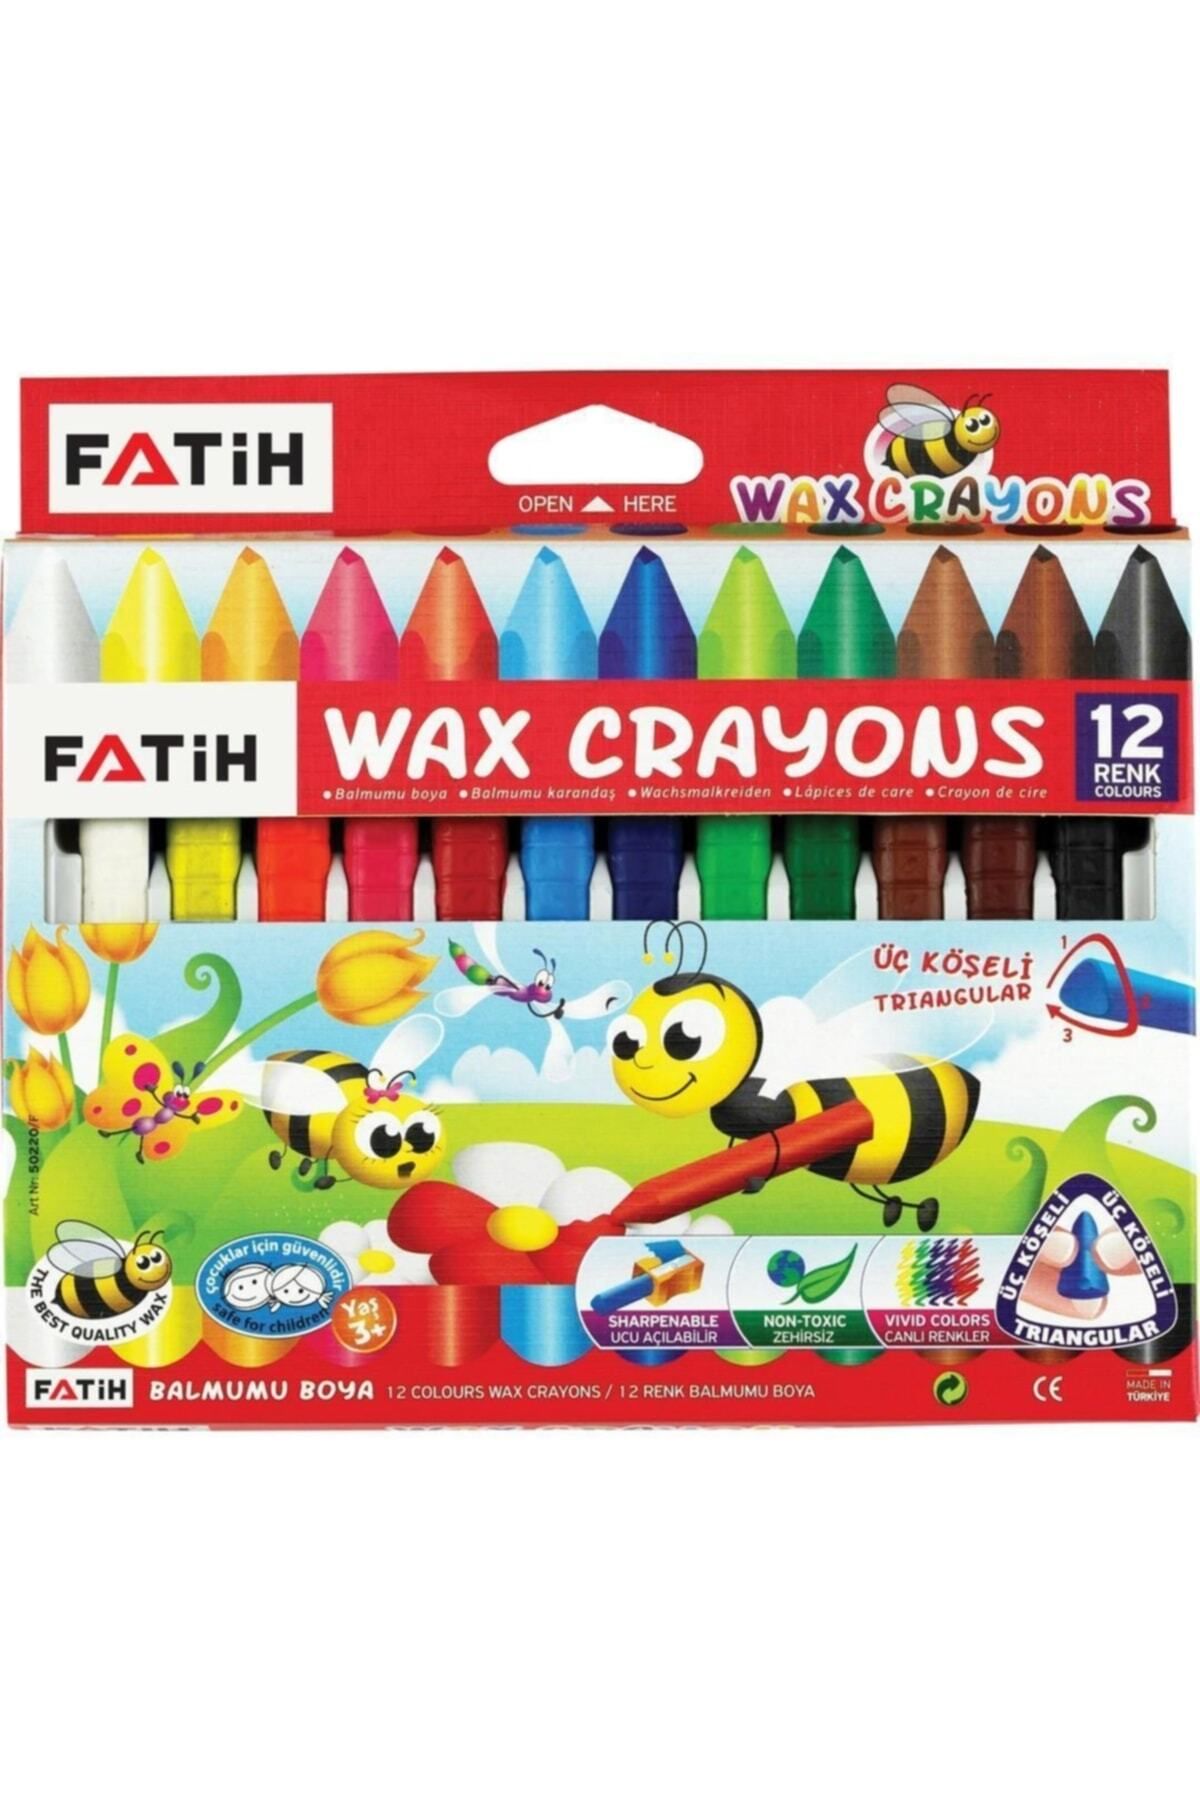 Fatih Triangular Crayons Üçgen Polimer Mum Boya 12 Renk